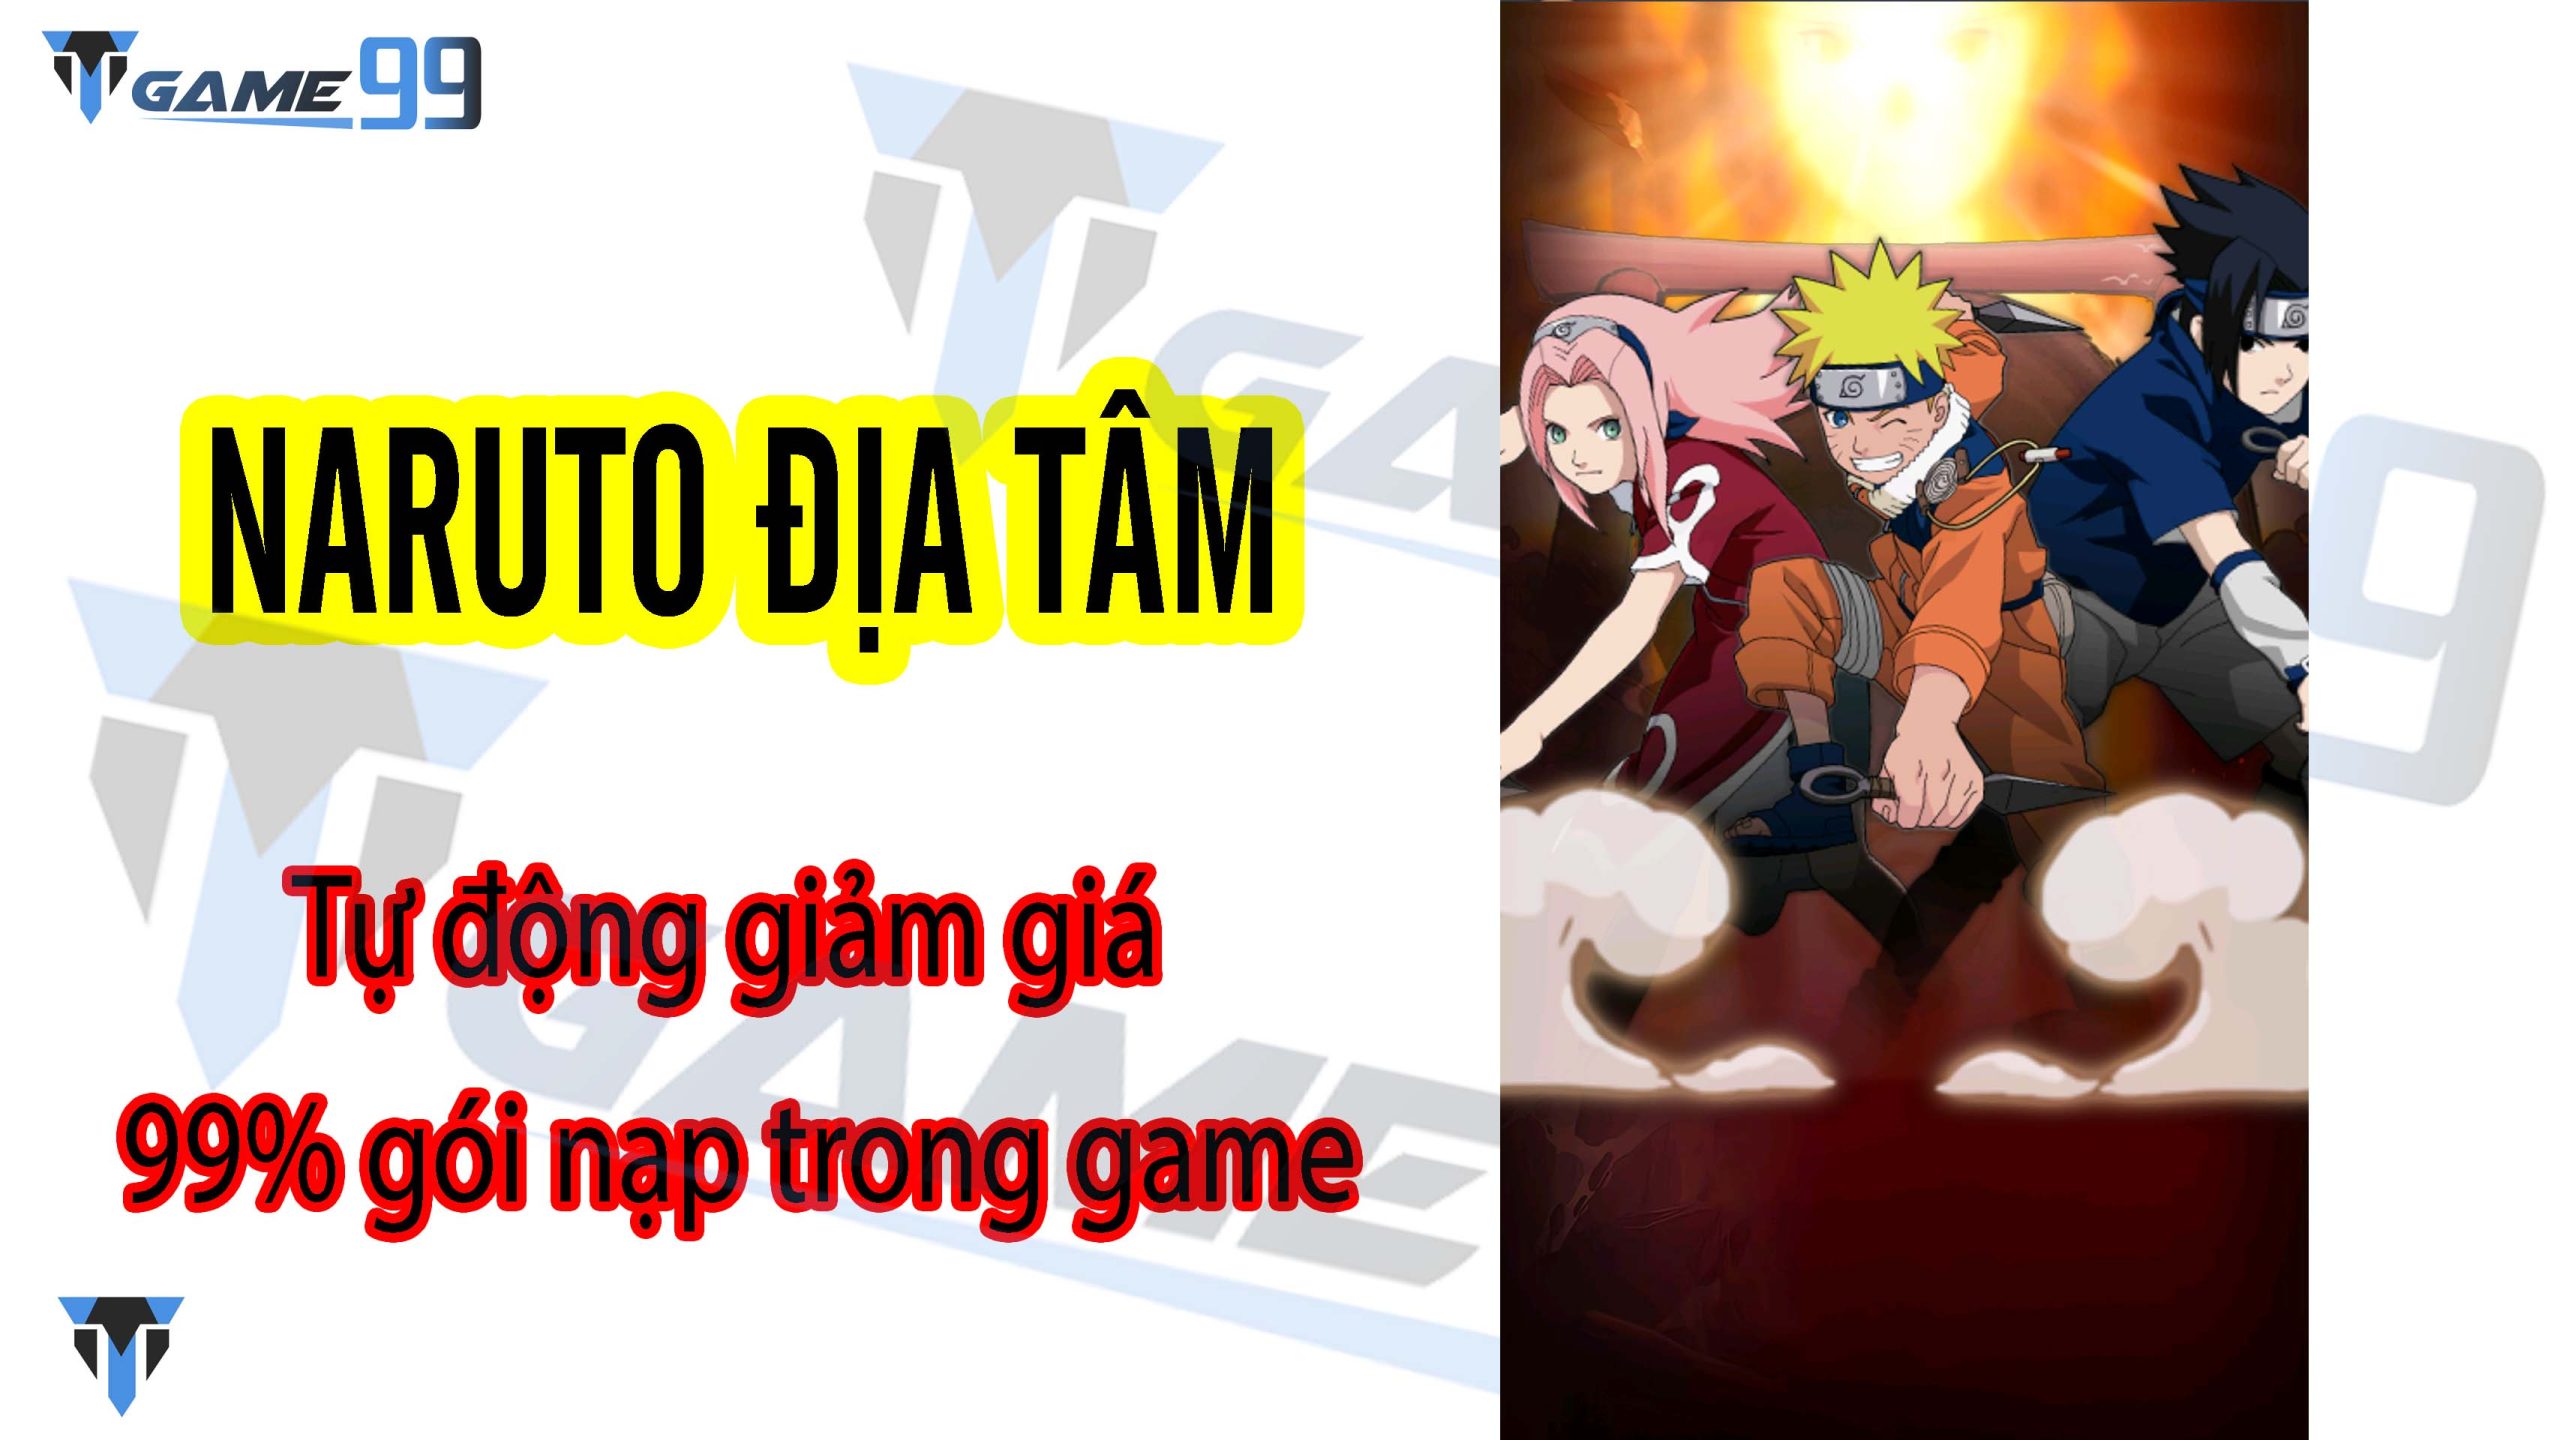 Tmgame99 Naruto Dia Tam (1)